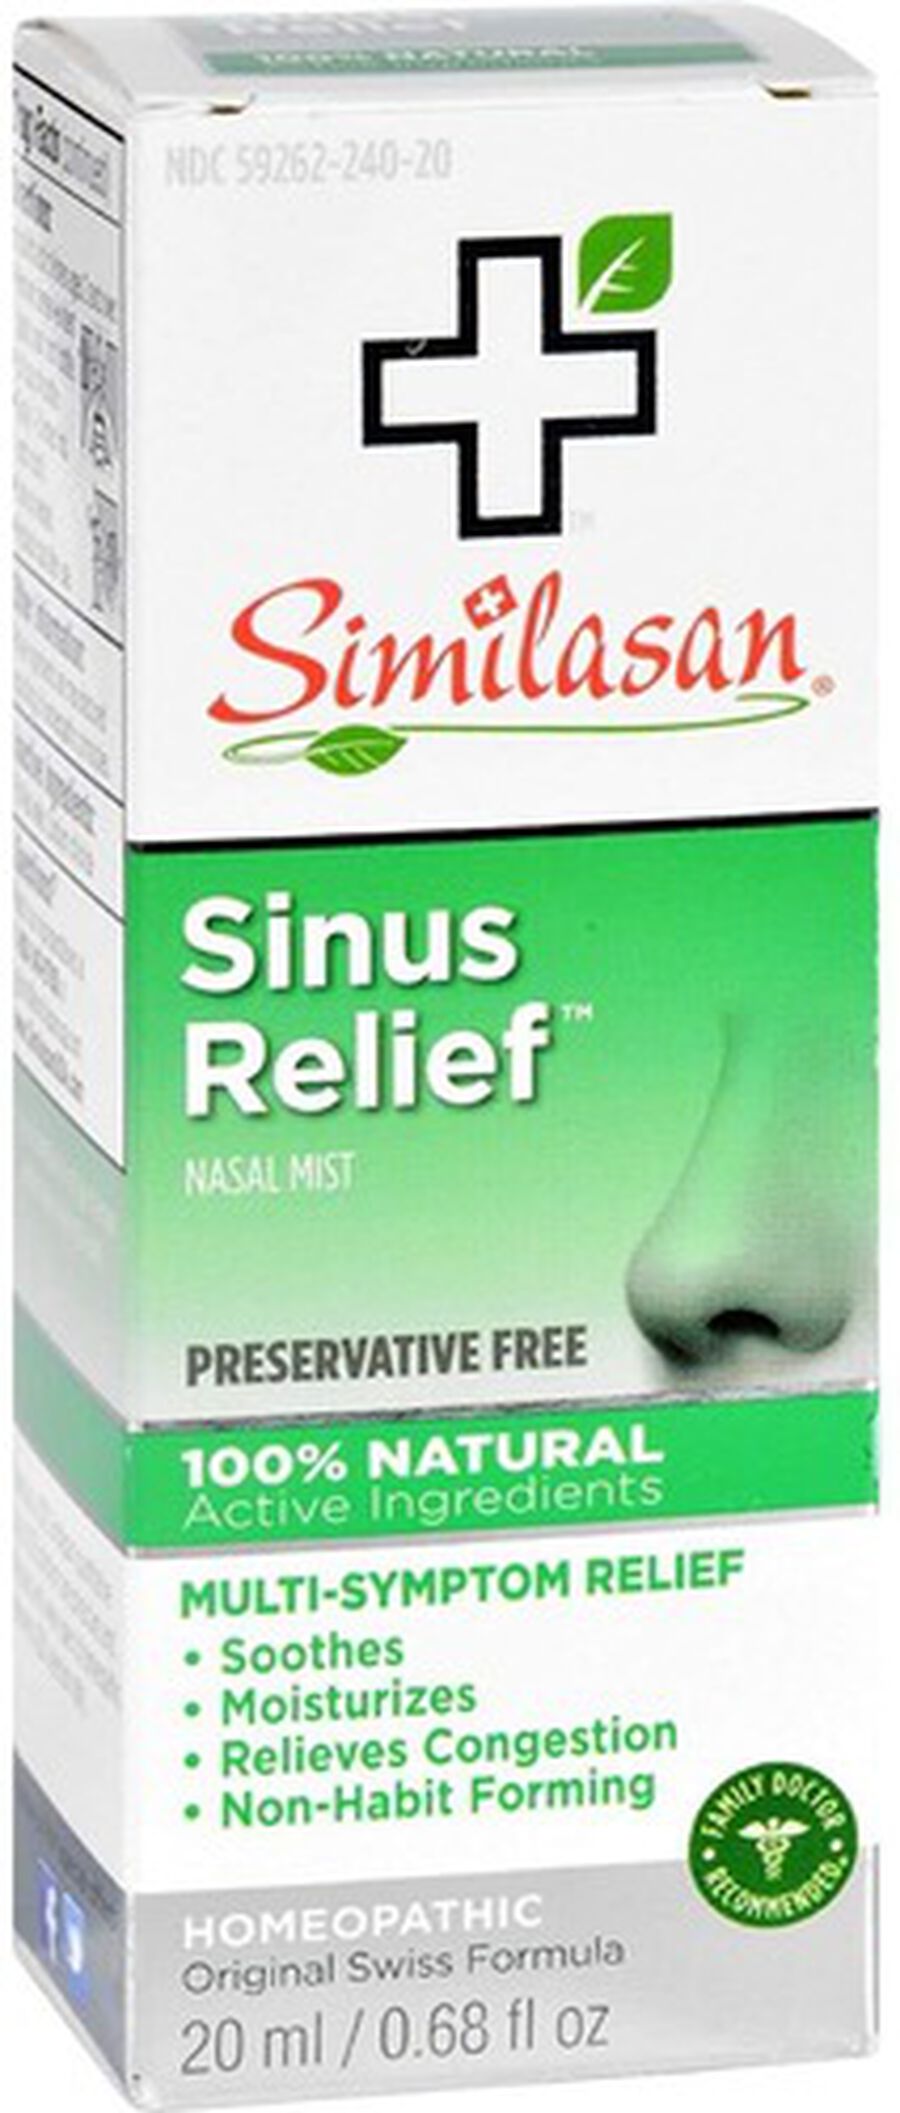 Similasan Sinus Relief, preservative free, 0.68 fl oz., , large image number 3